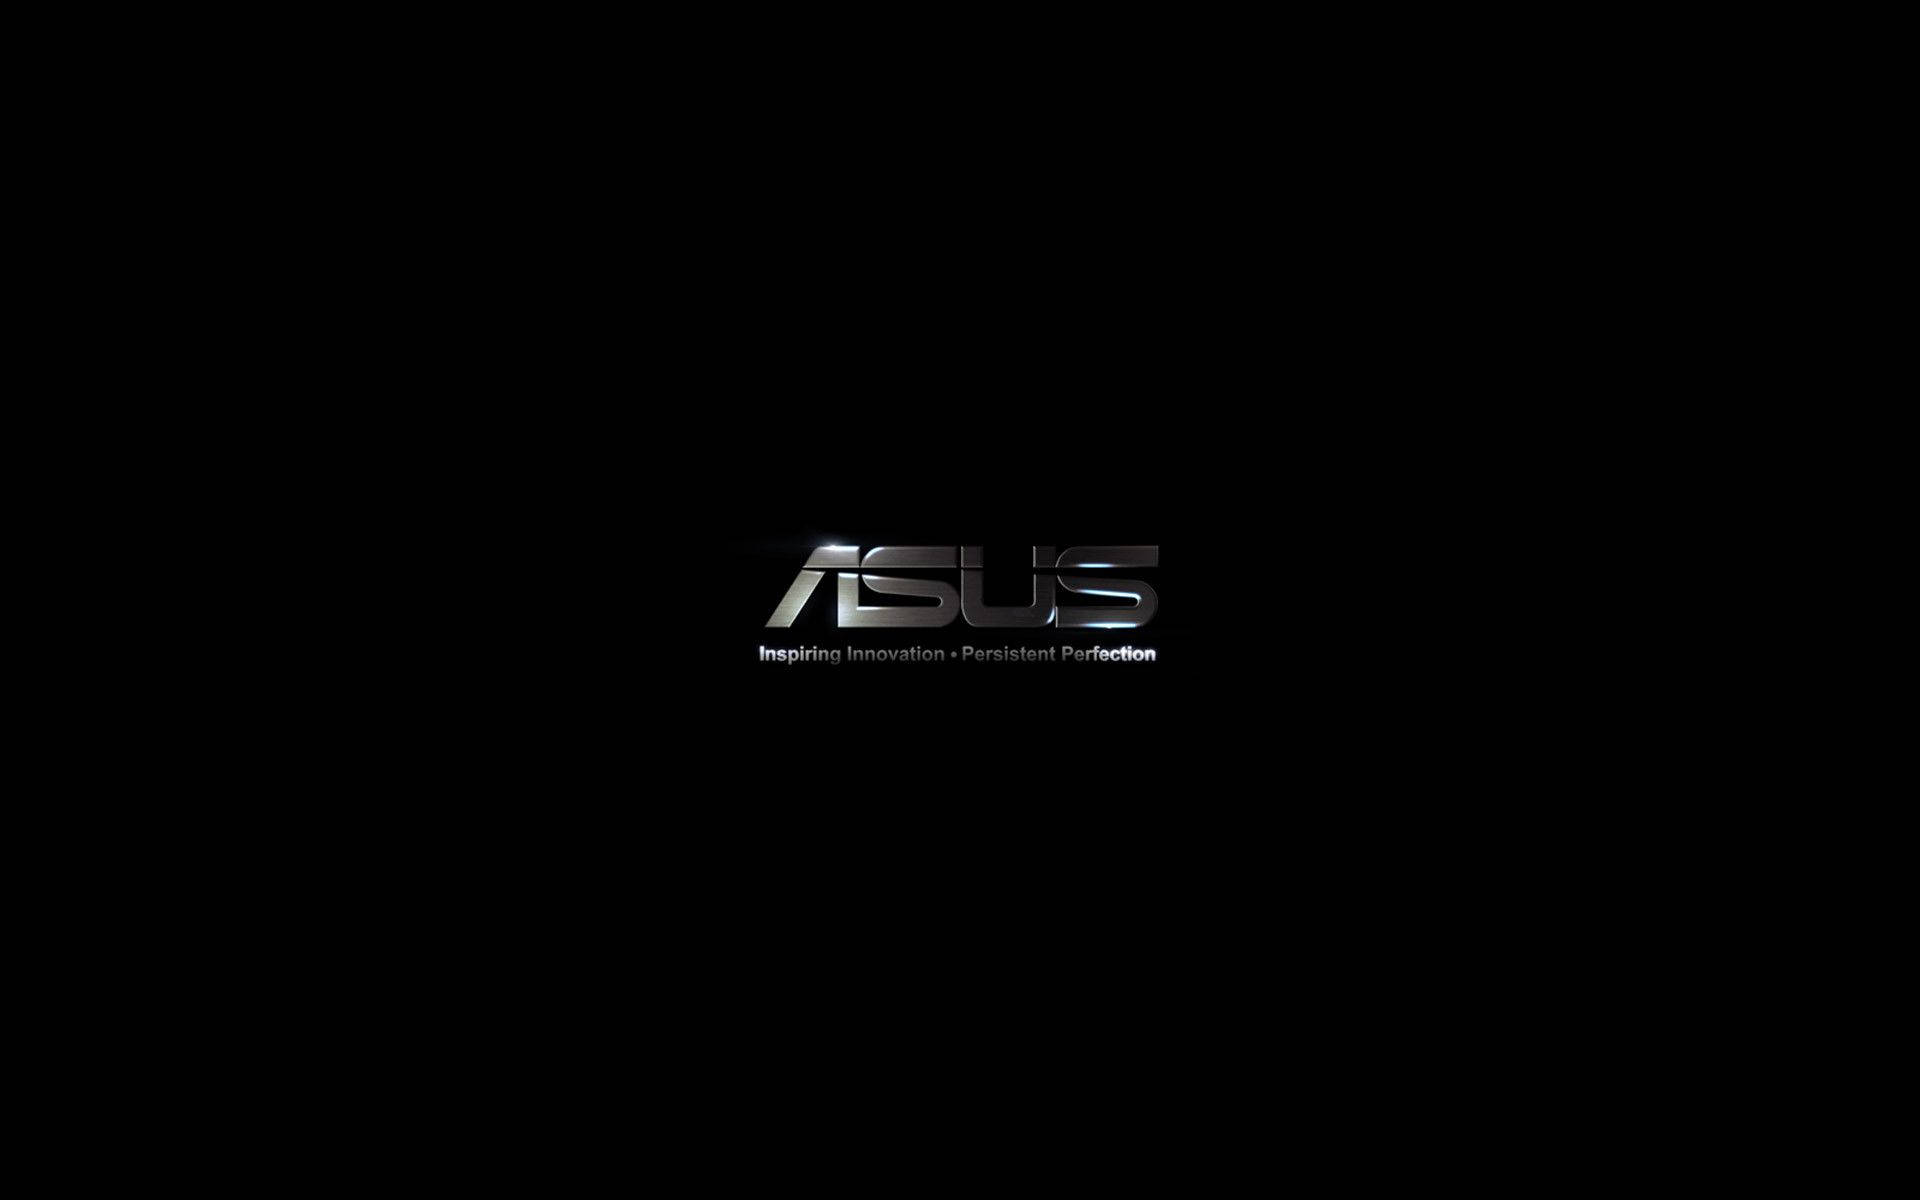 Asus Silver Logo Slogan Picture